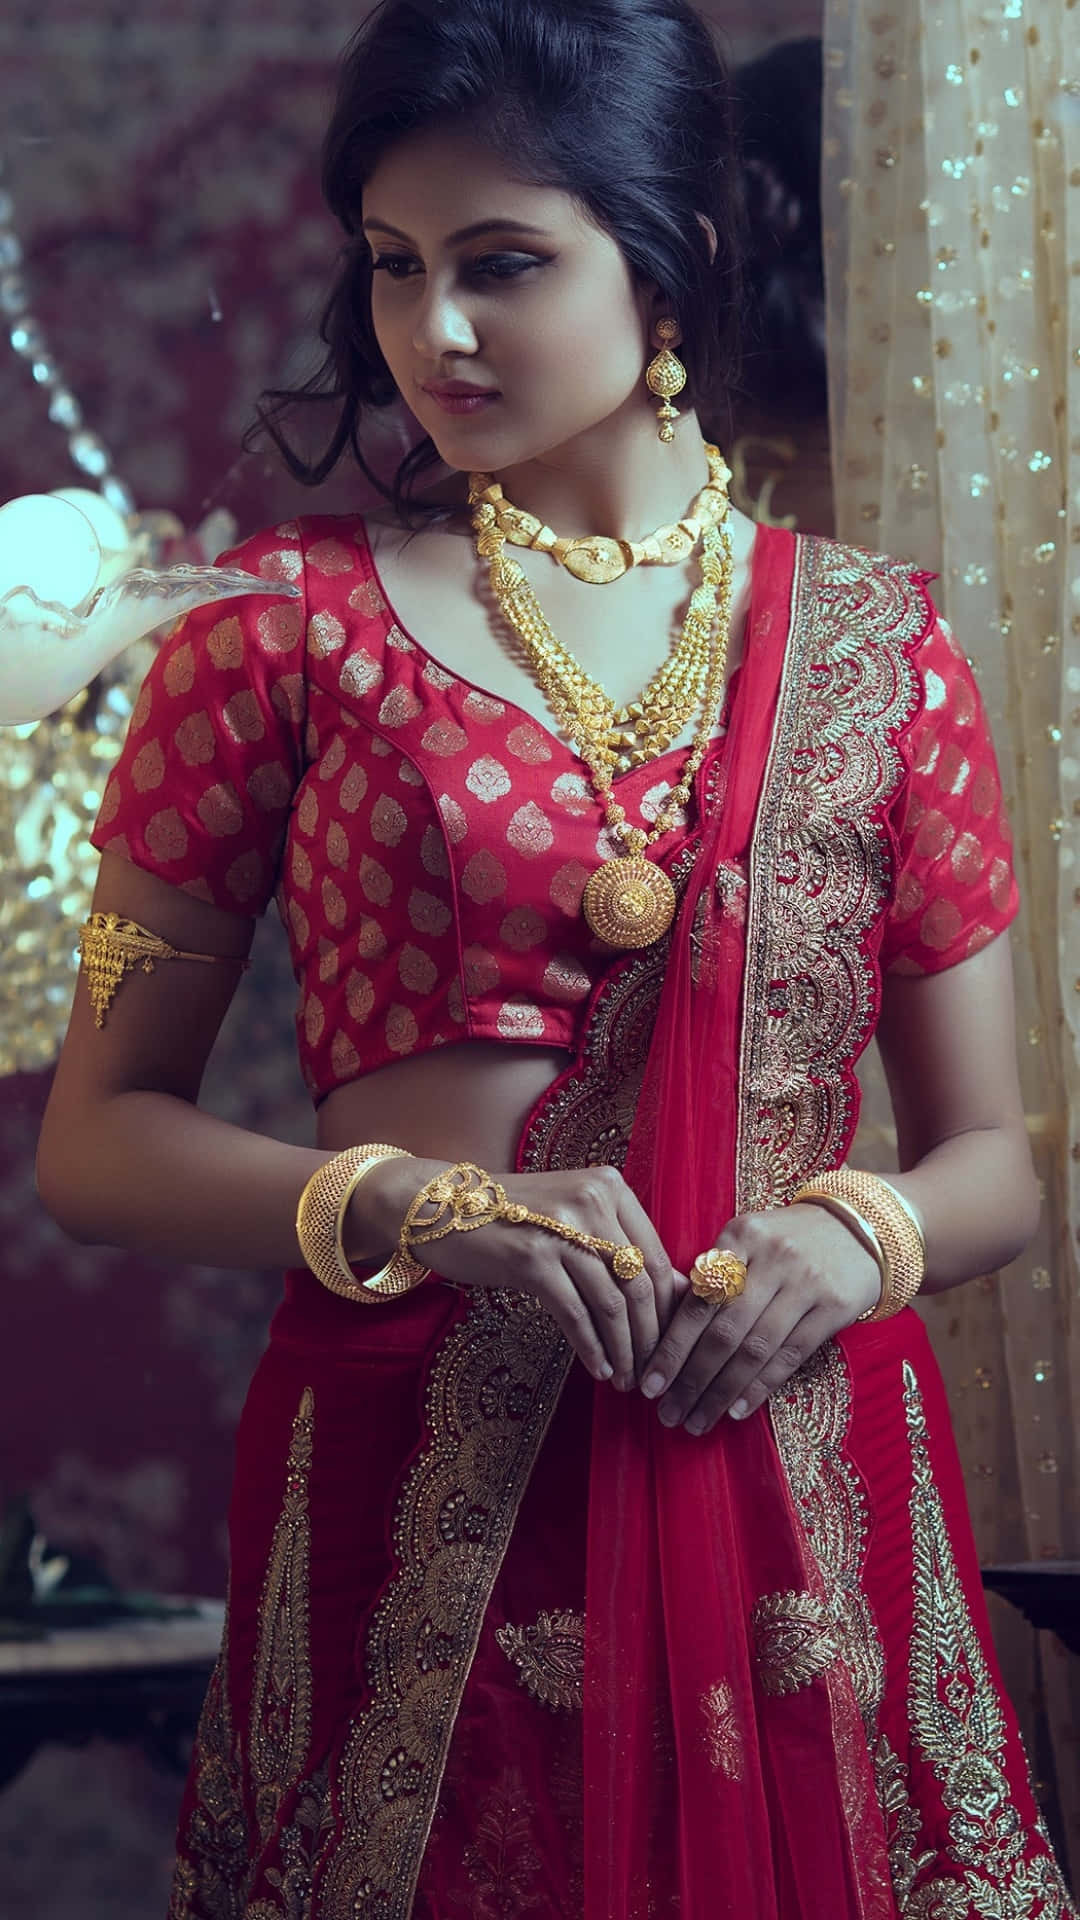 Indian Woman Wearing Red Sari And Kundan Jewelry Wallpaper